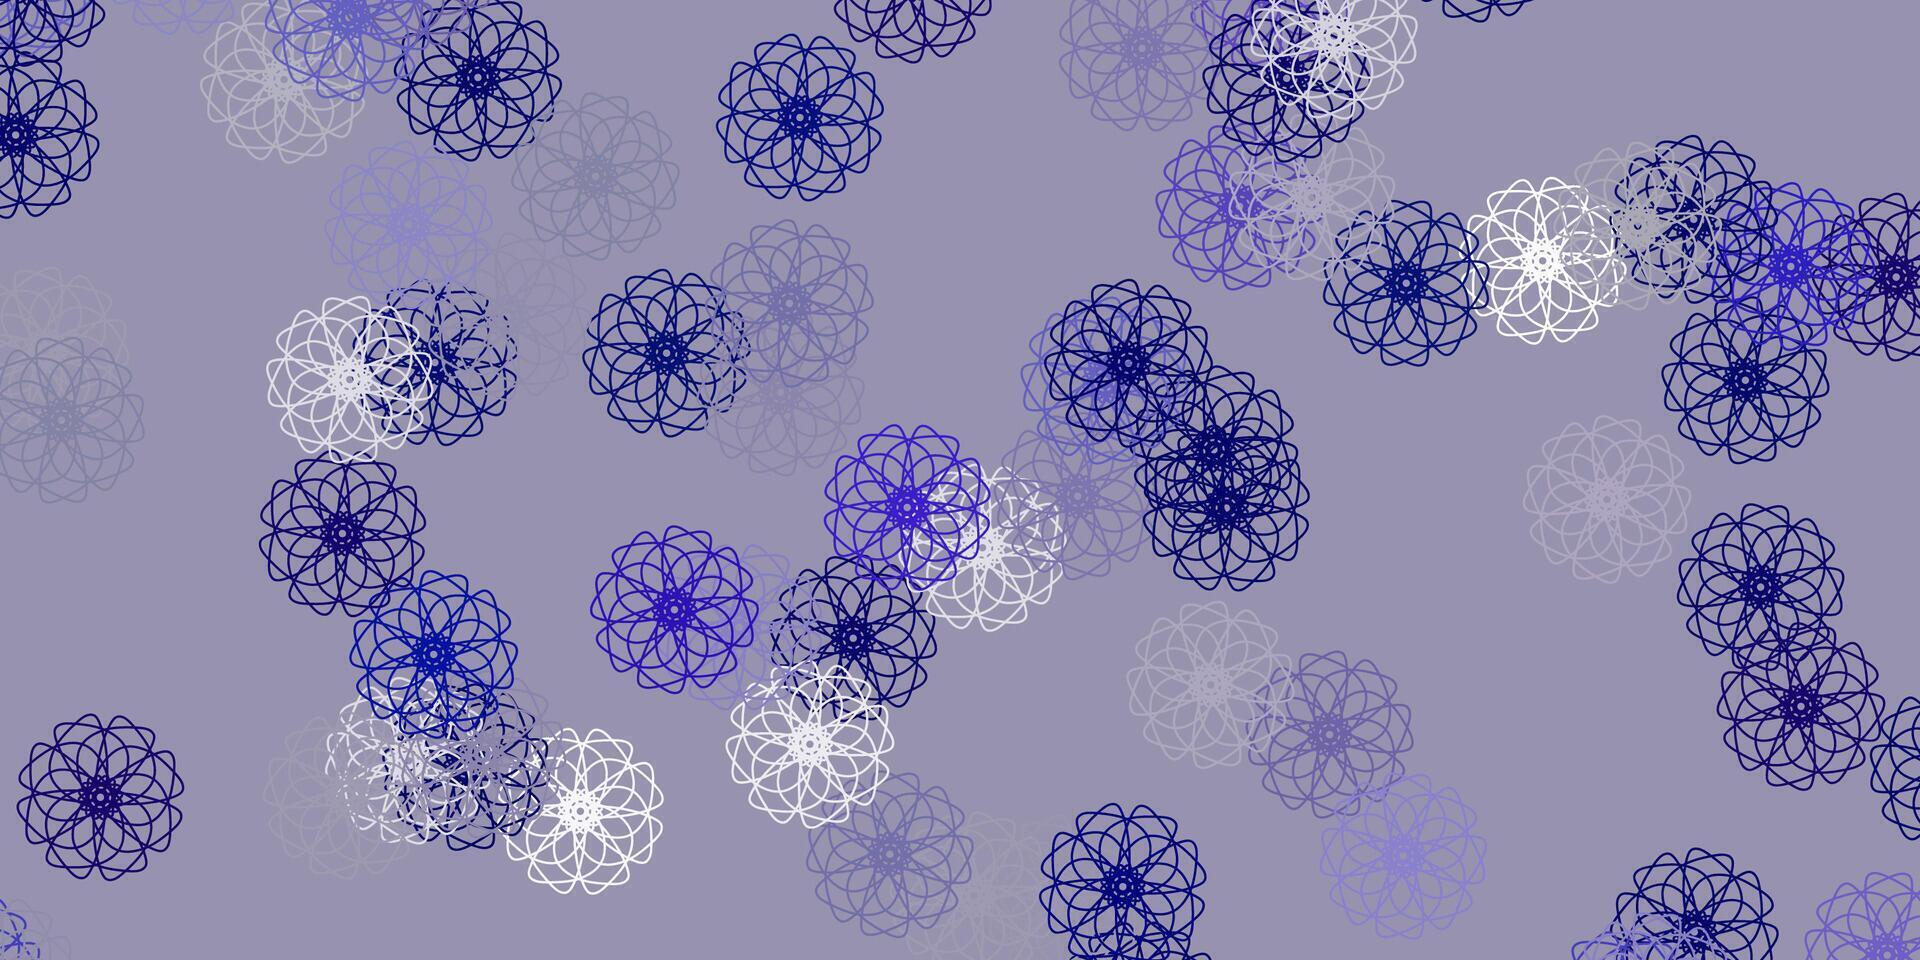 ljuslila vektor doodle textur med blommor.